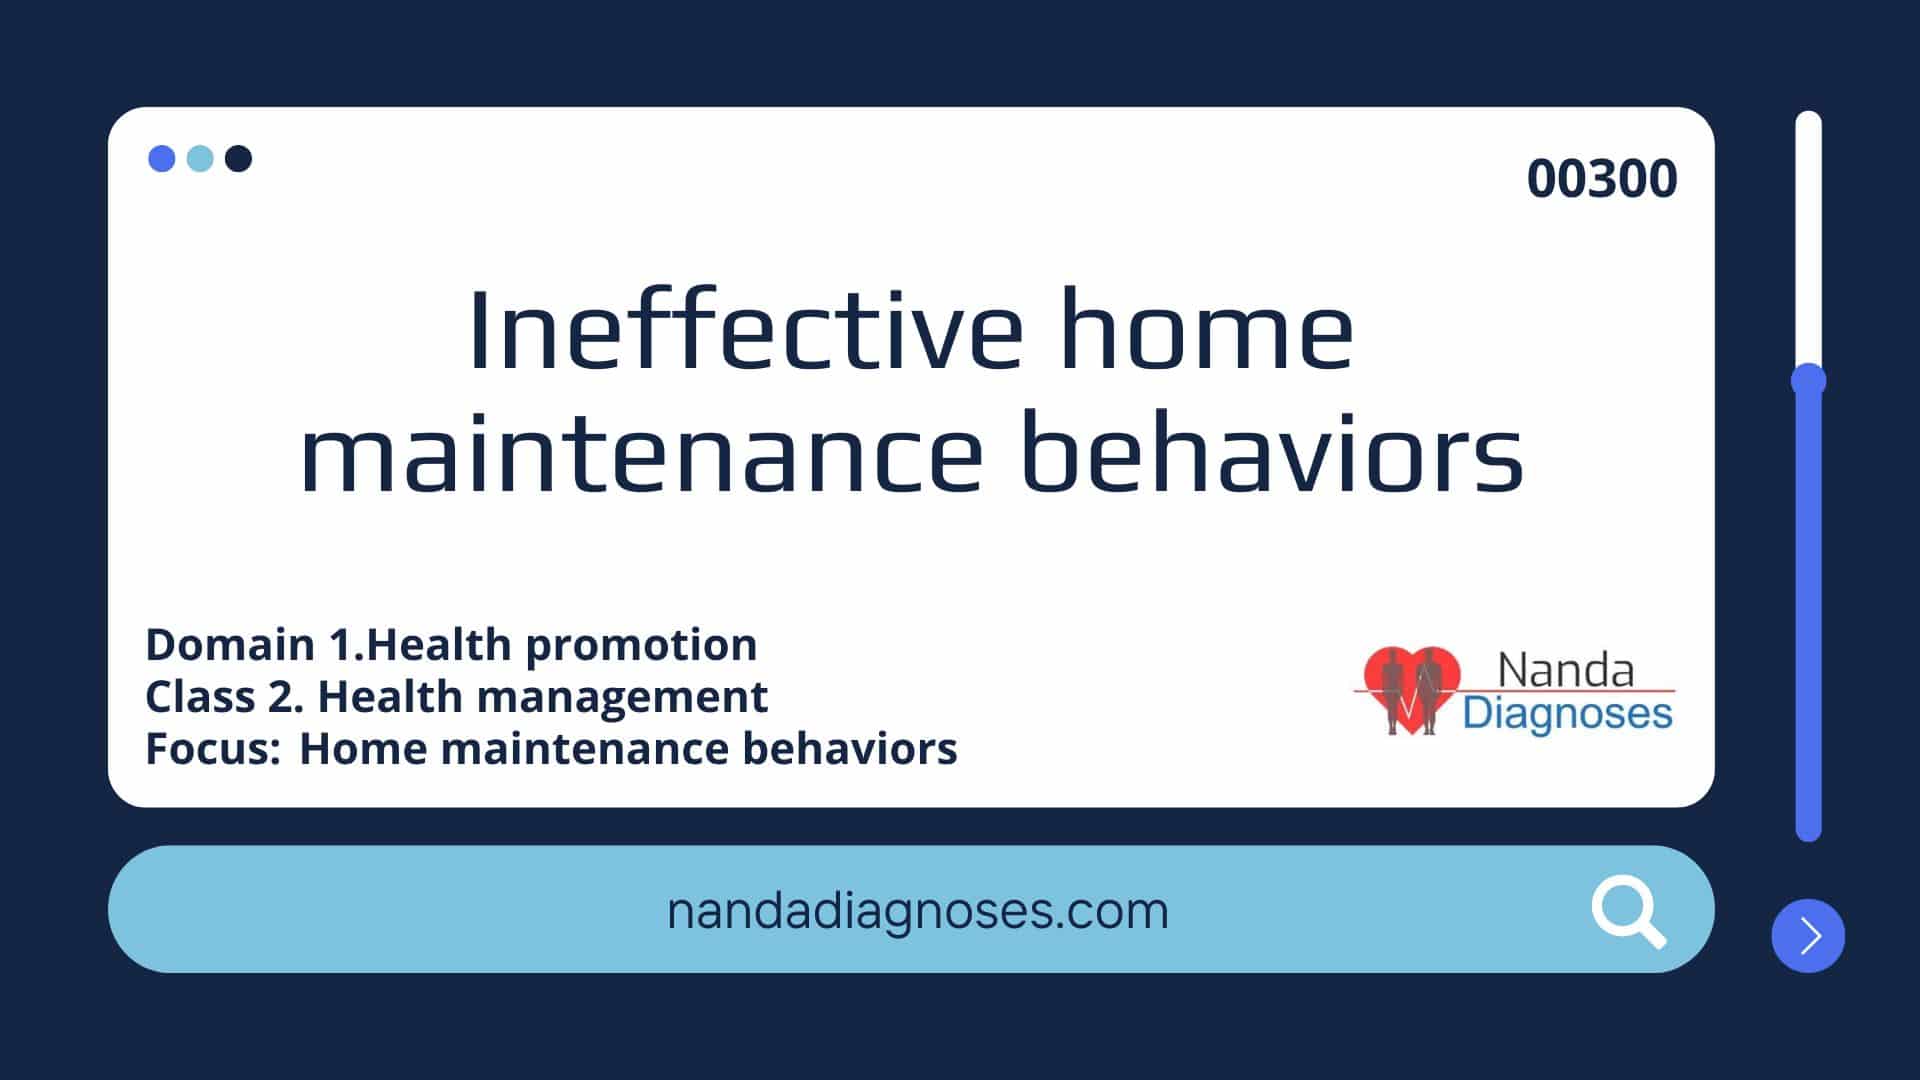 Ineffective home maintenance behaviors